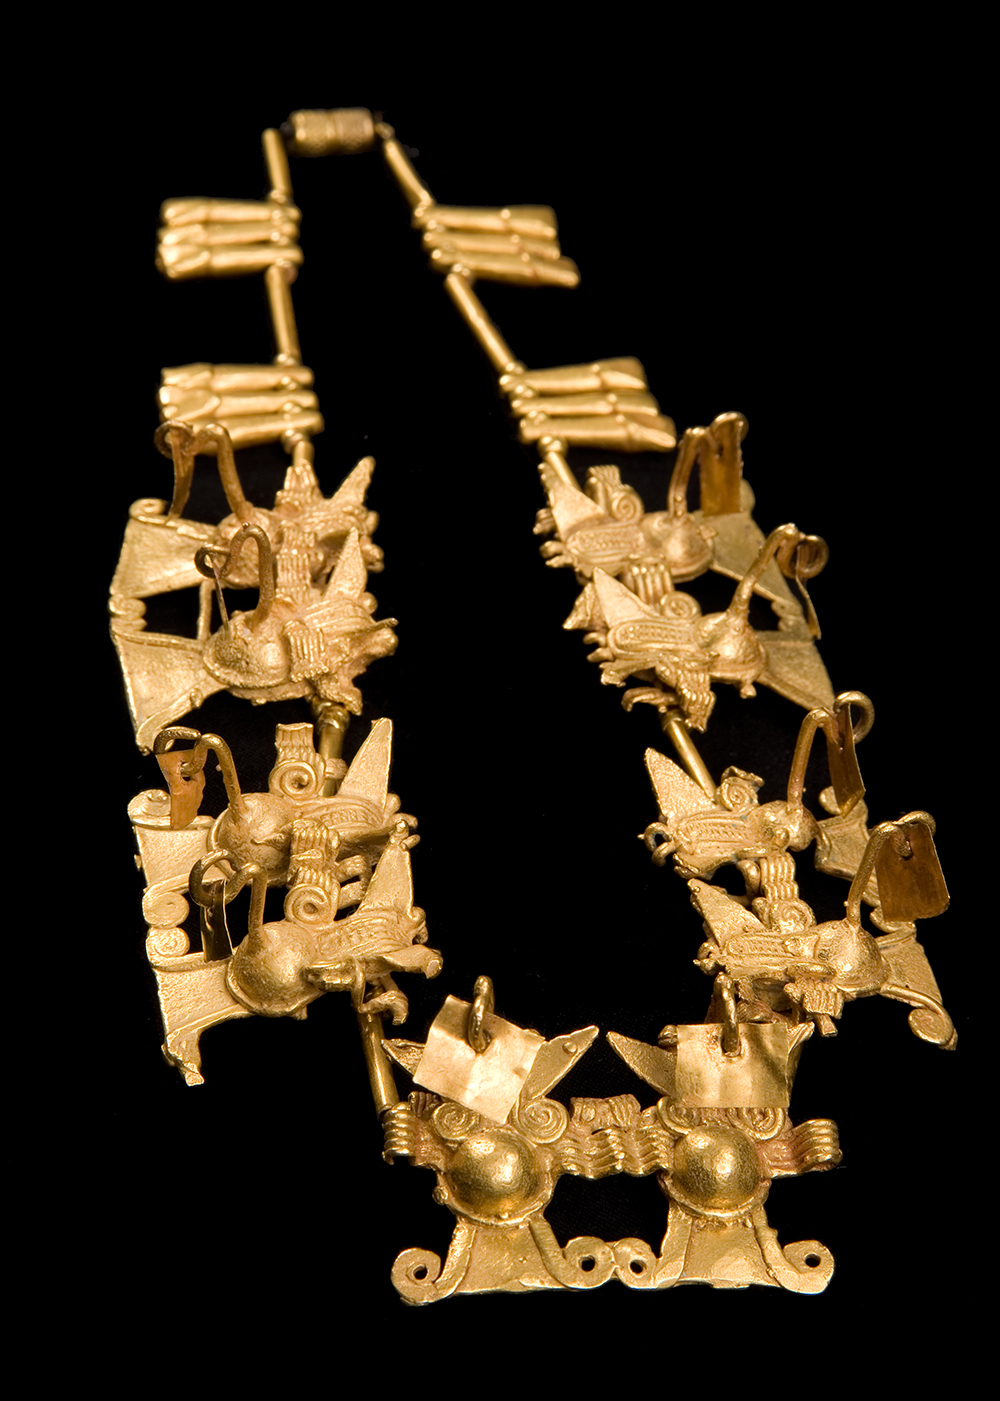 a gold necklace made of bat sculptures